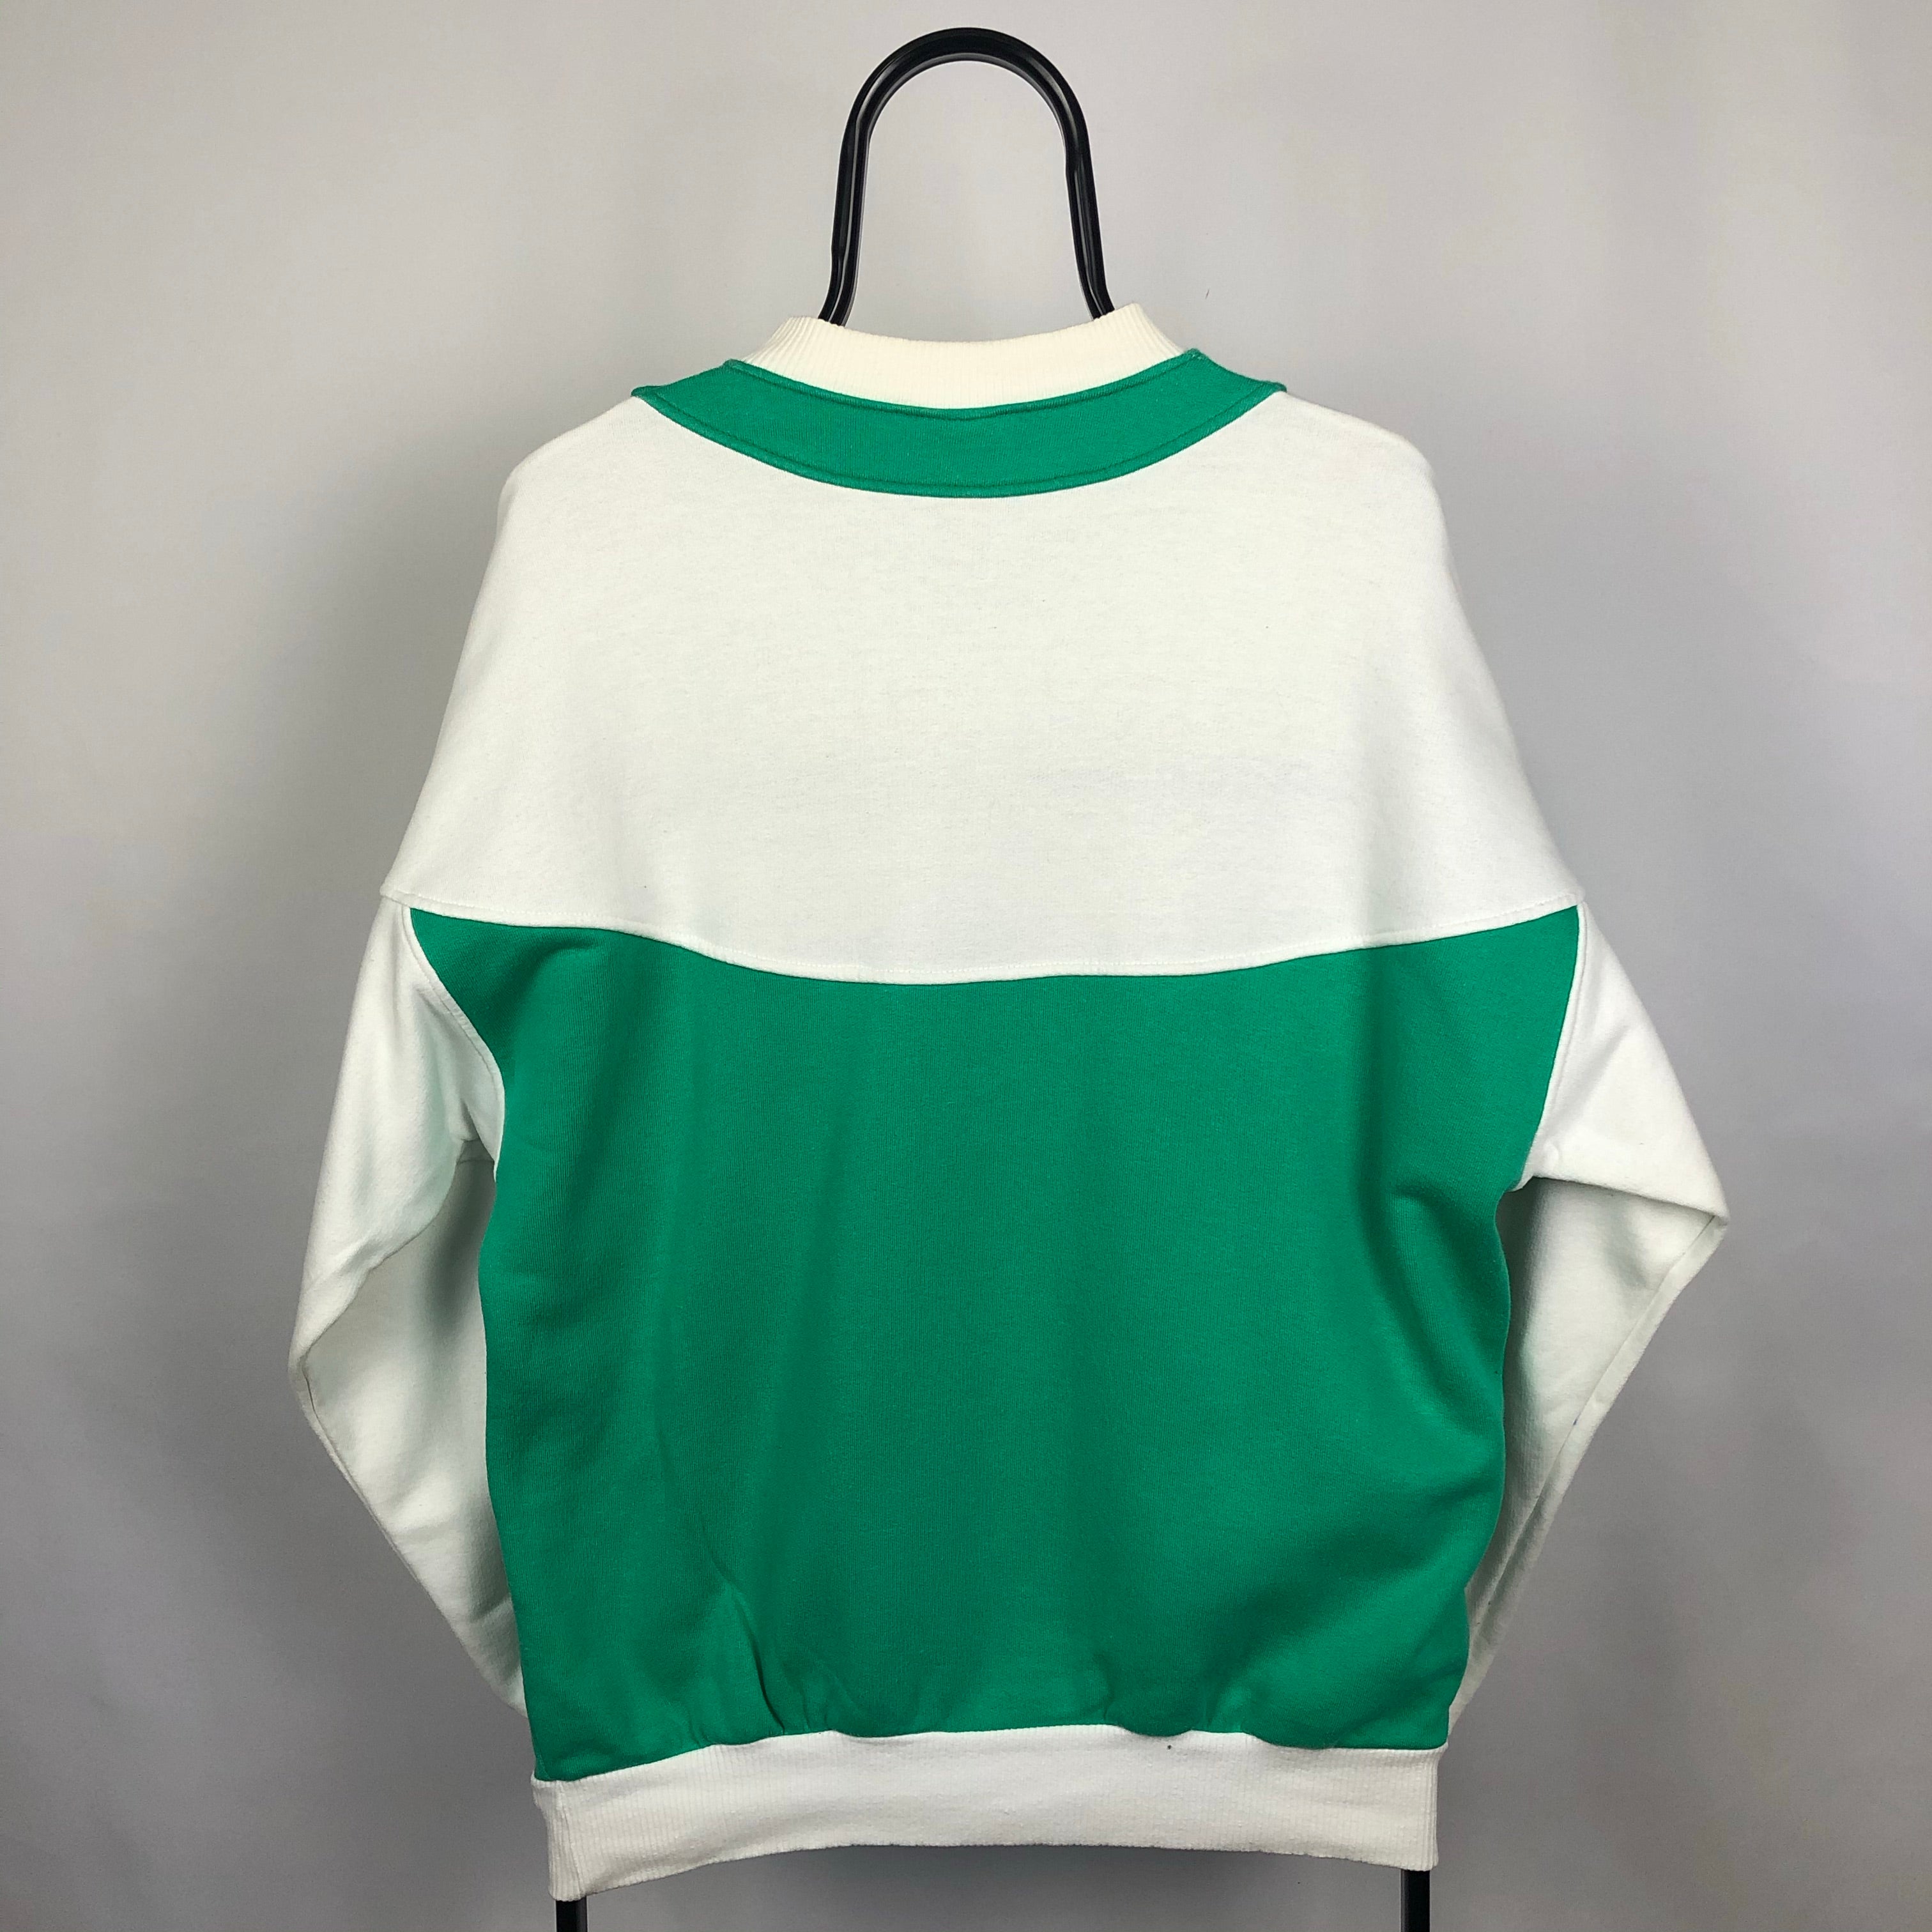 Vintage Puma Zip Up Sweatshirt in Green & White - Men’s Medium/Women’s ...